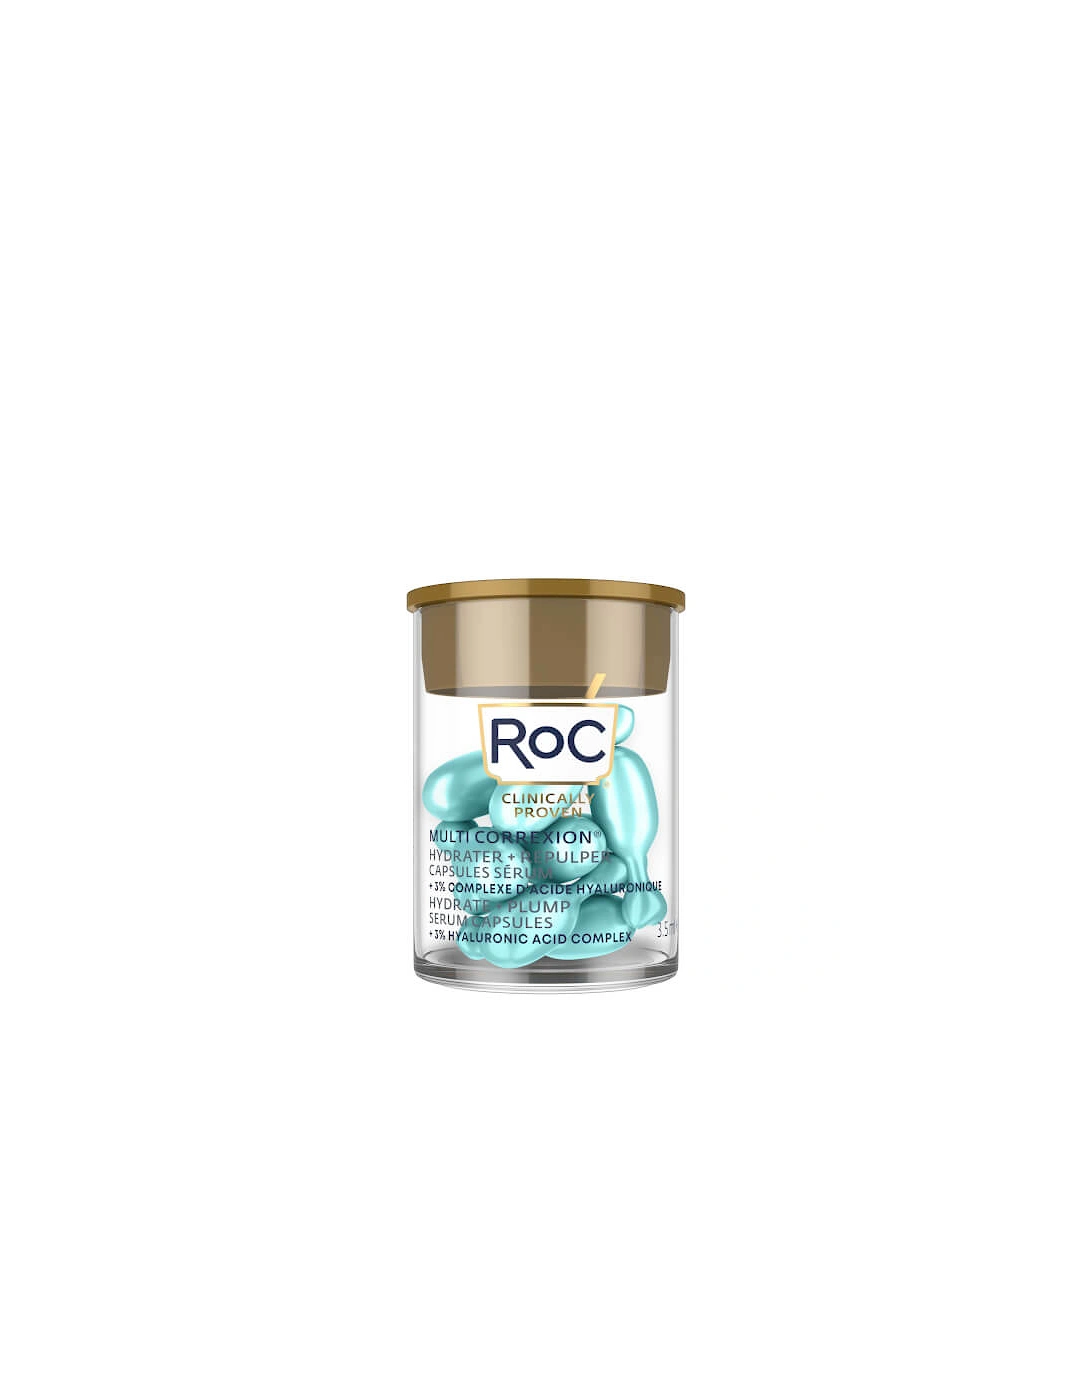 RoC Multi Correxion Hydrate and Plump Capsules - 10 Capsules, 3 of 2